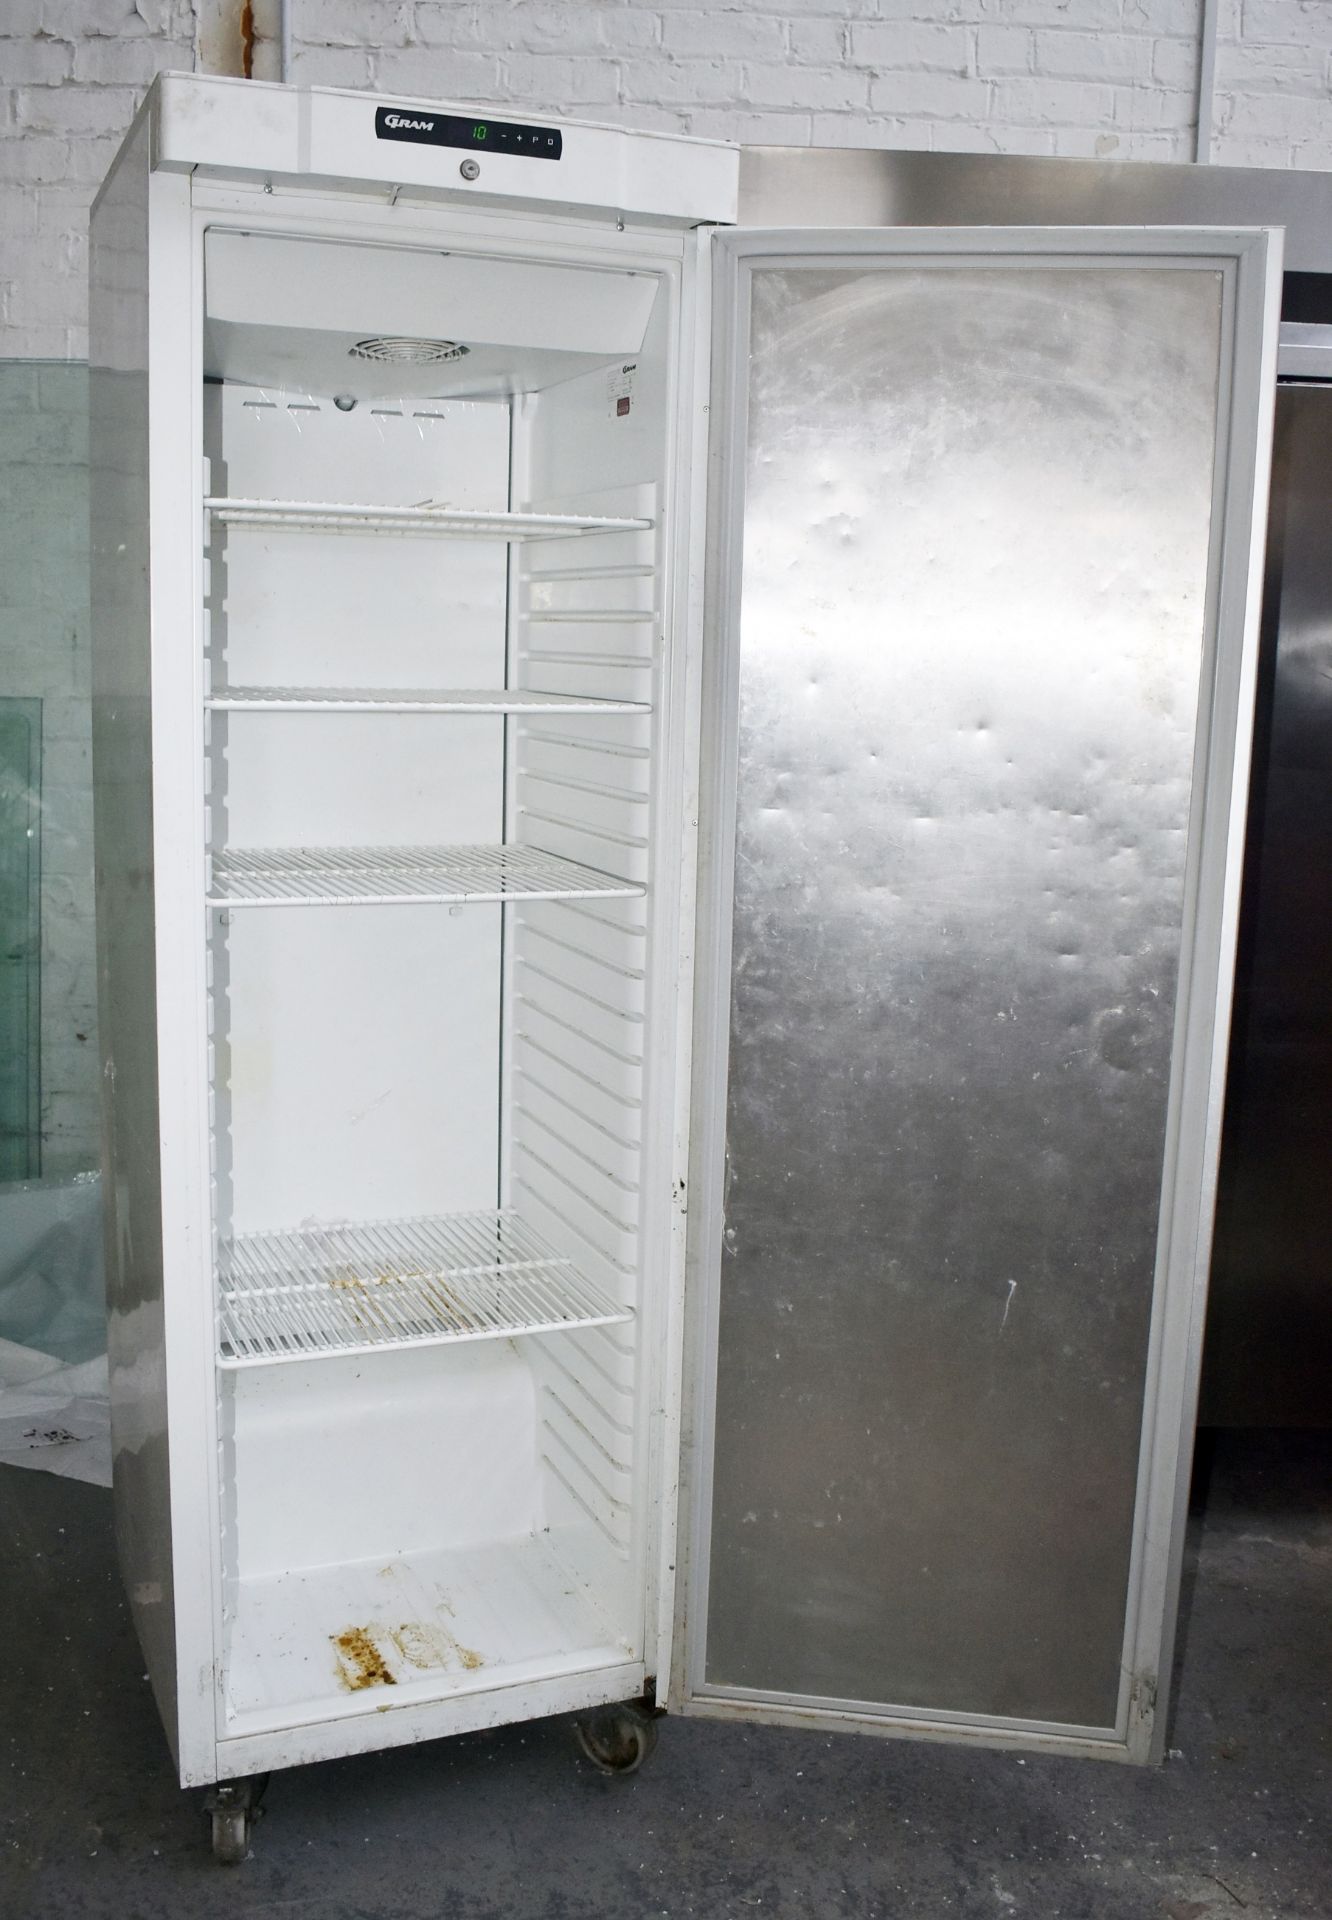 1 x Gram Single Door Commercial Upright Refrigerator - 359Ltr Capacity - Type: K 420 LG - Image 3 of 4